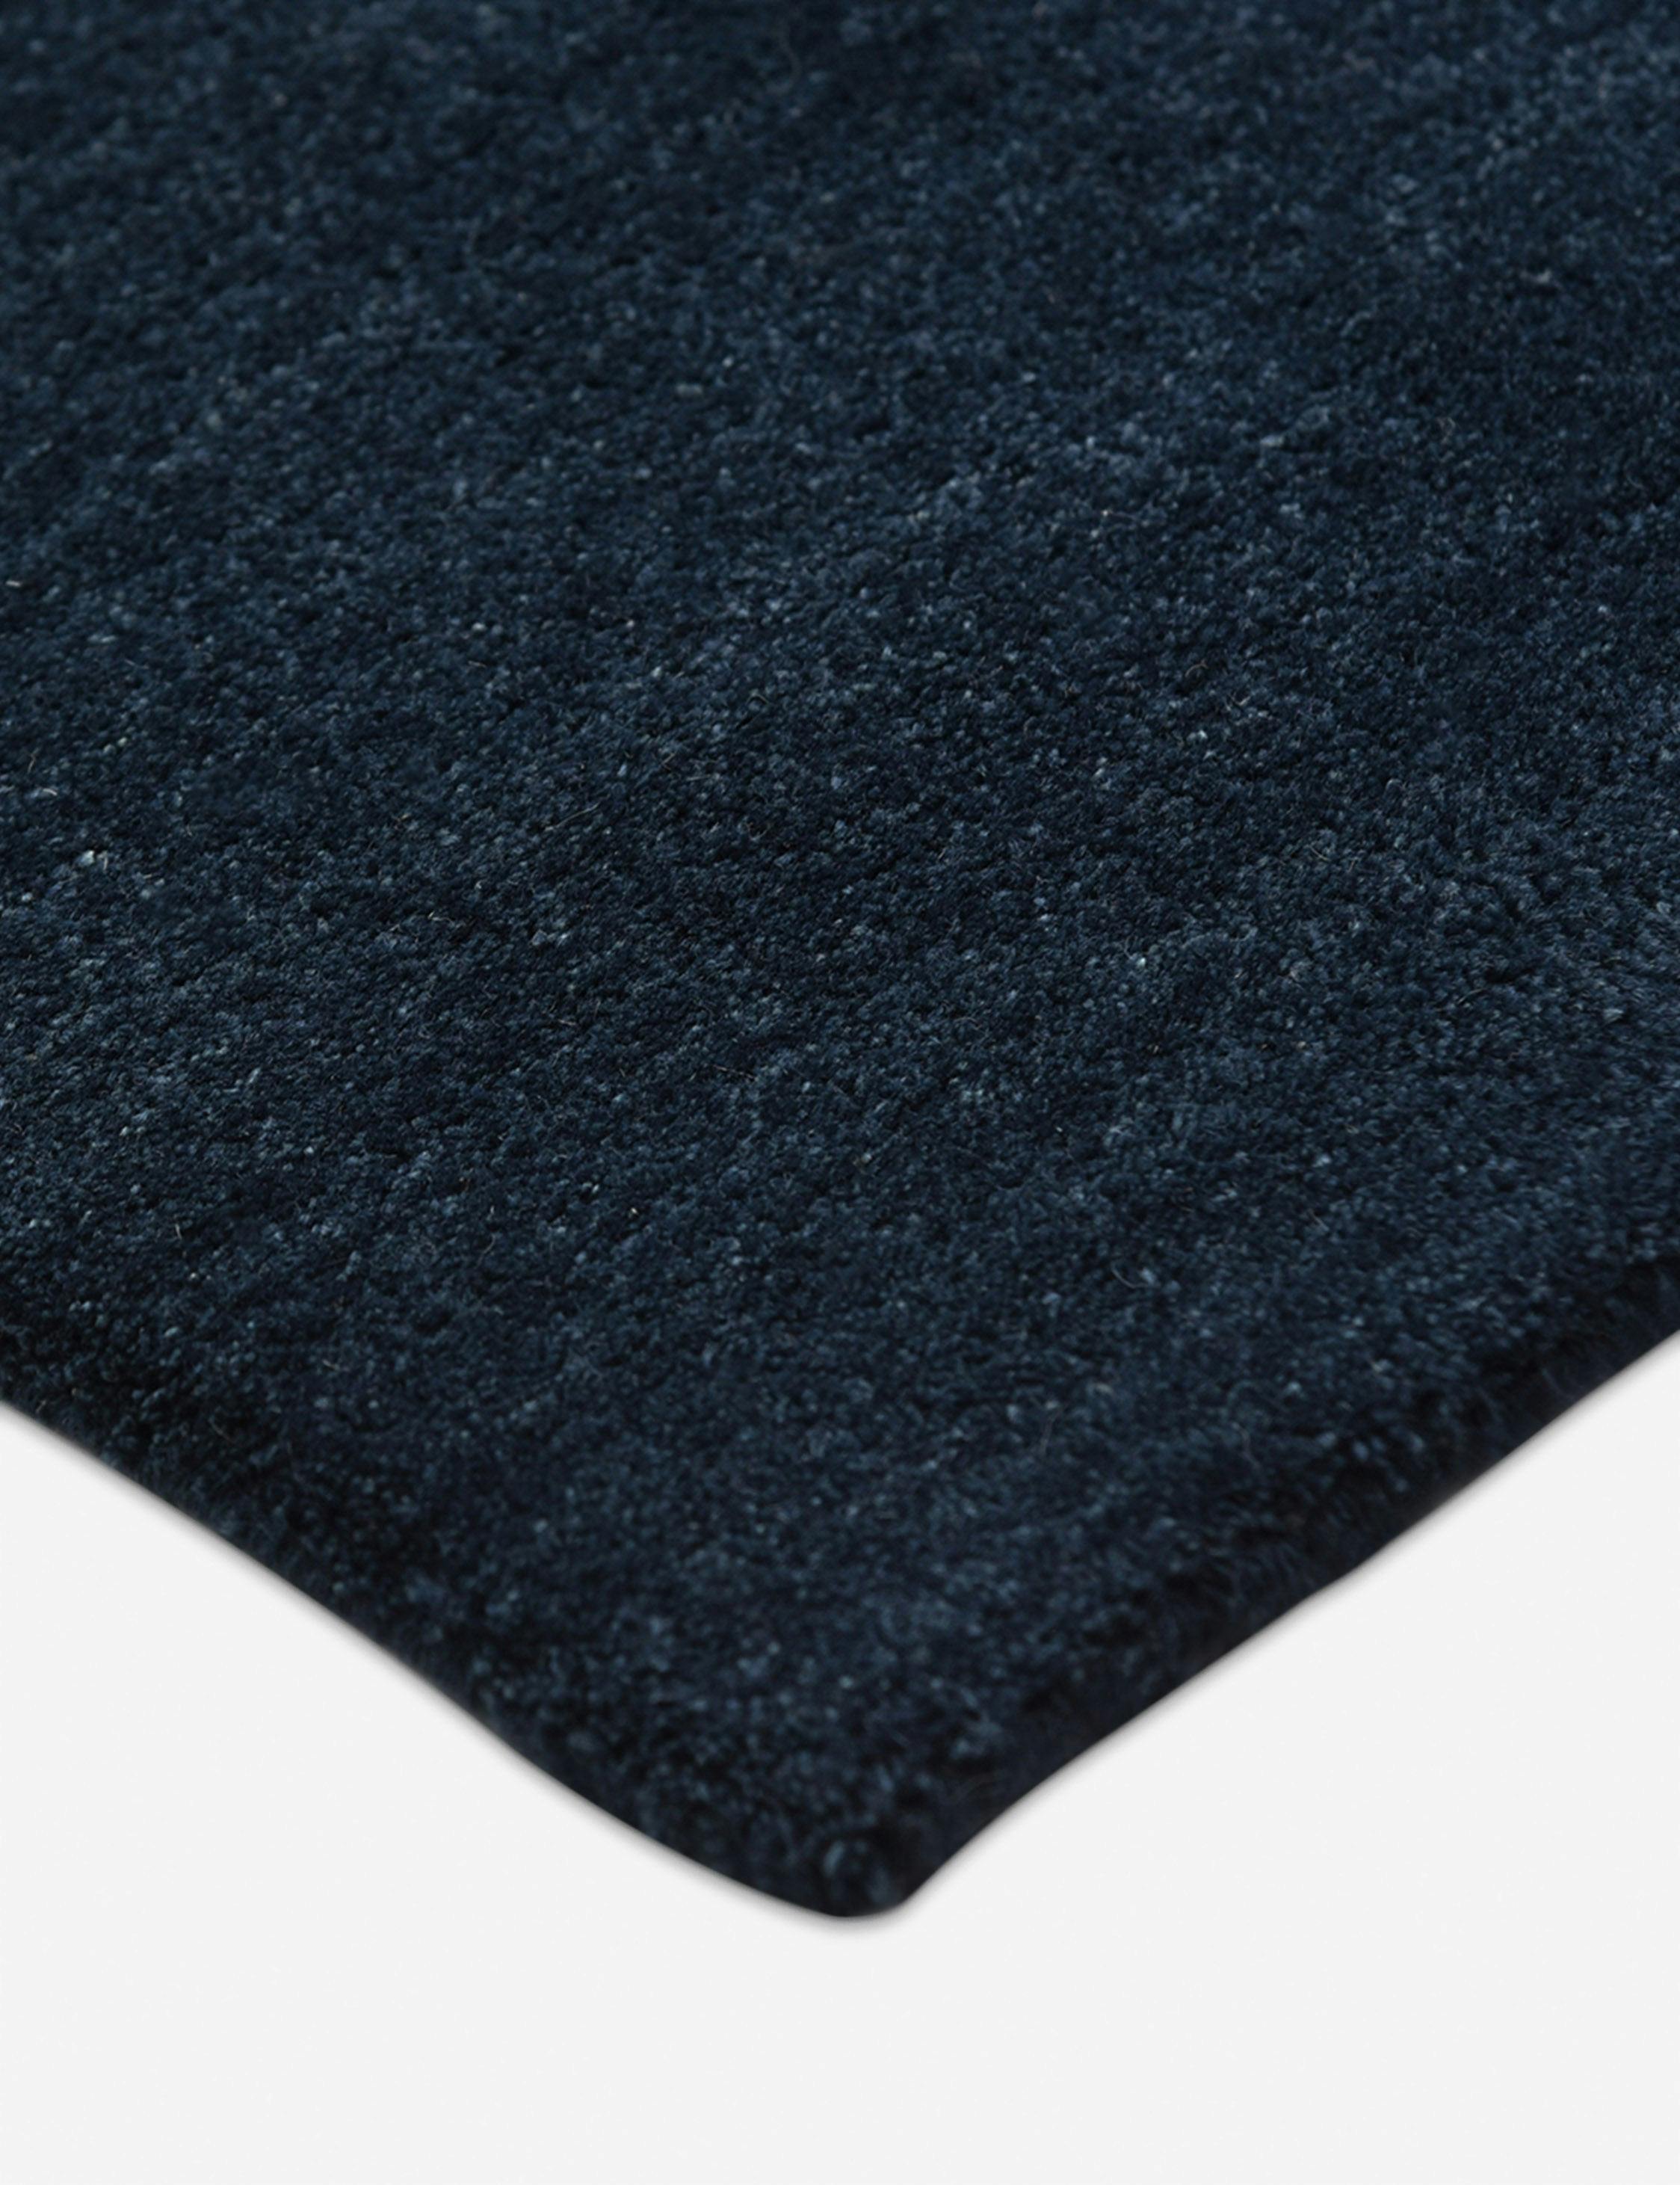 Handmade Striped Blue Wool-Cotton Blend 8' x 10' Area Rug